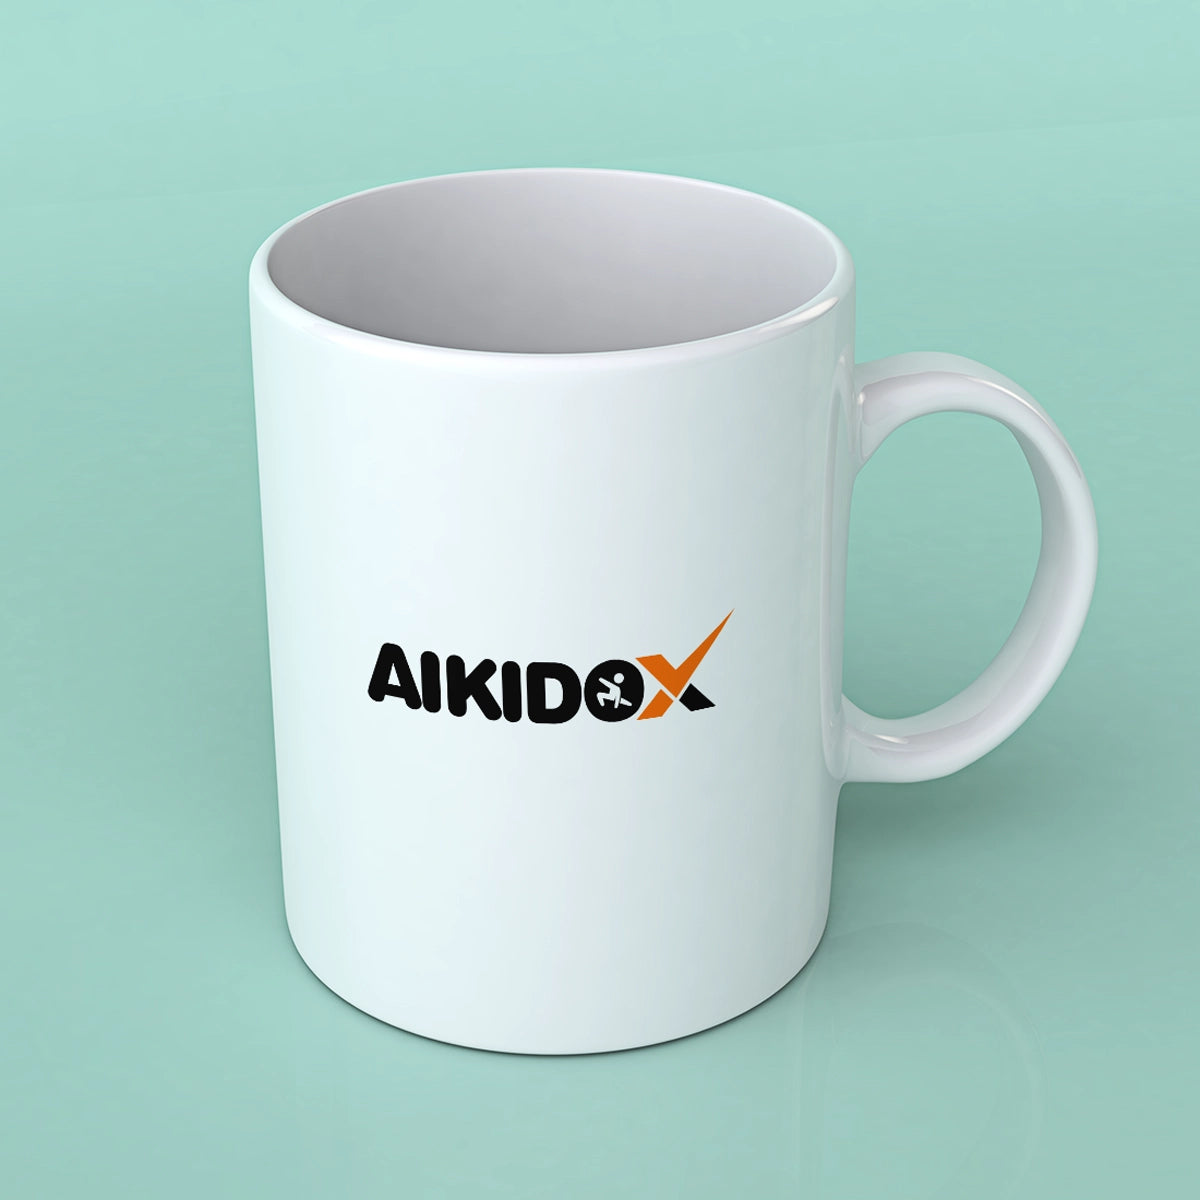 Aikidox.com